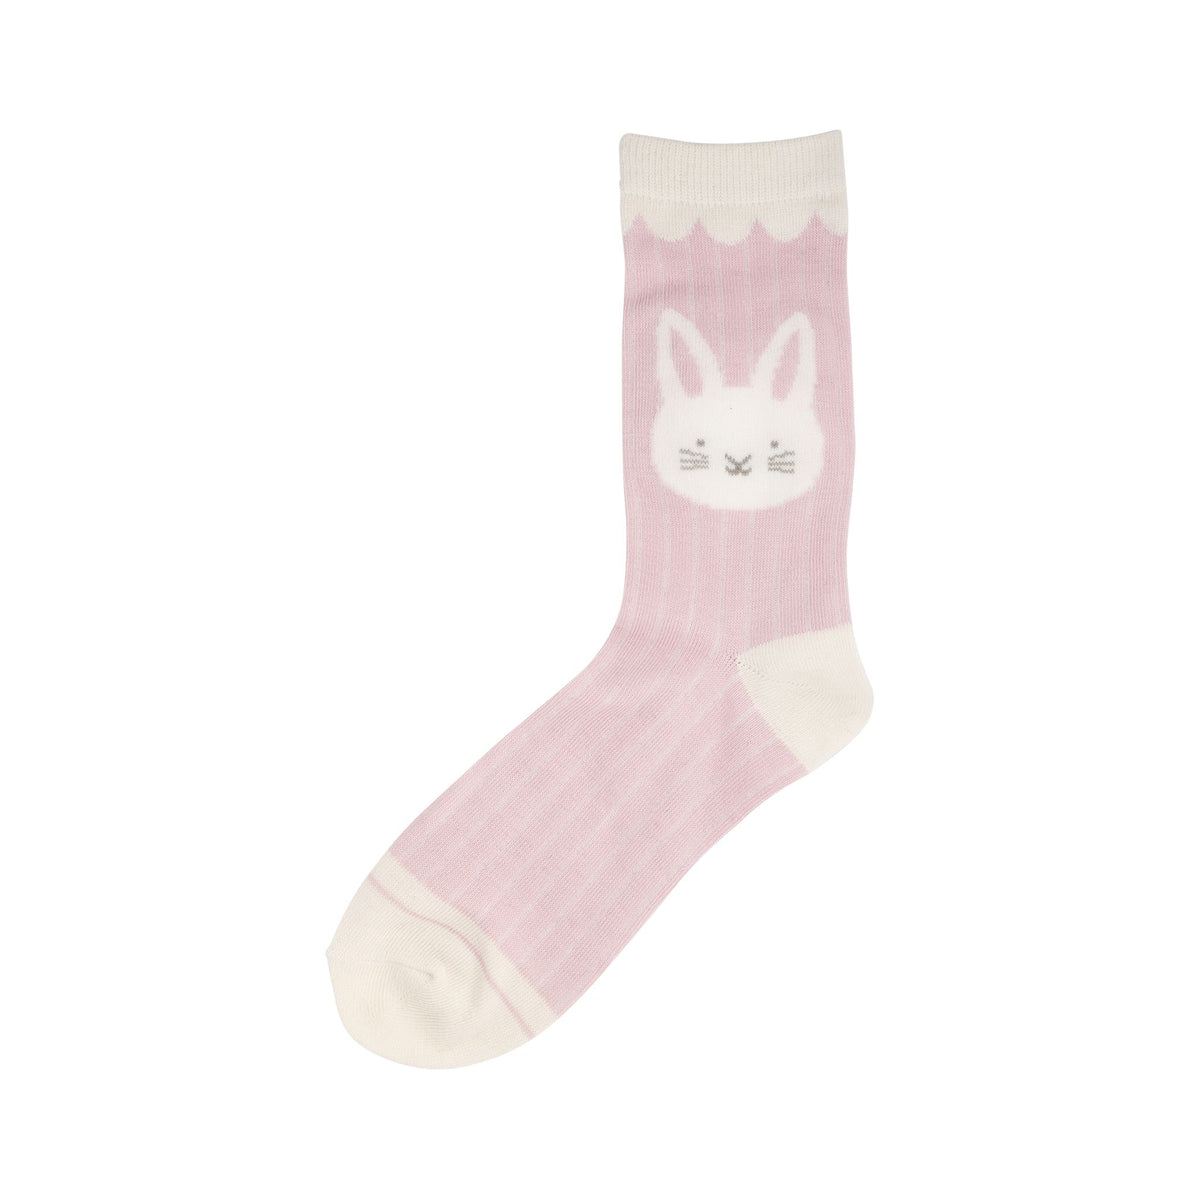 Bunny Socks - The Preppy Bunny